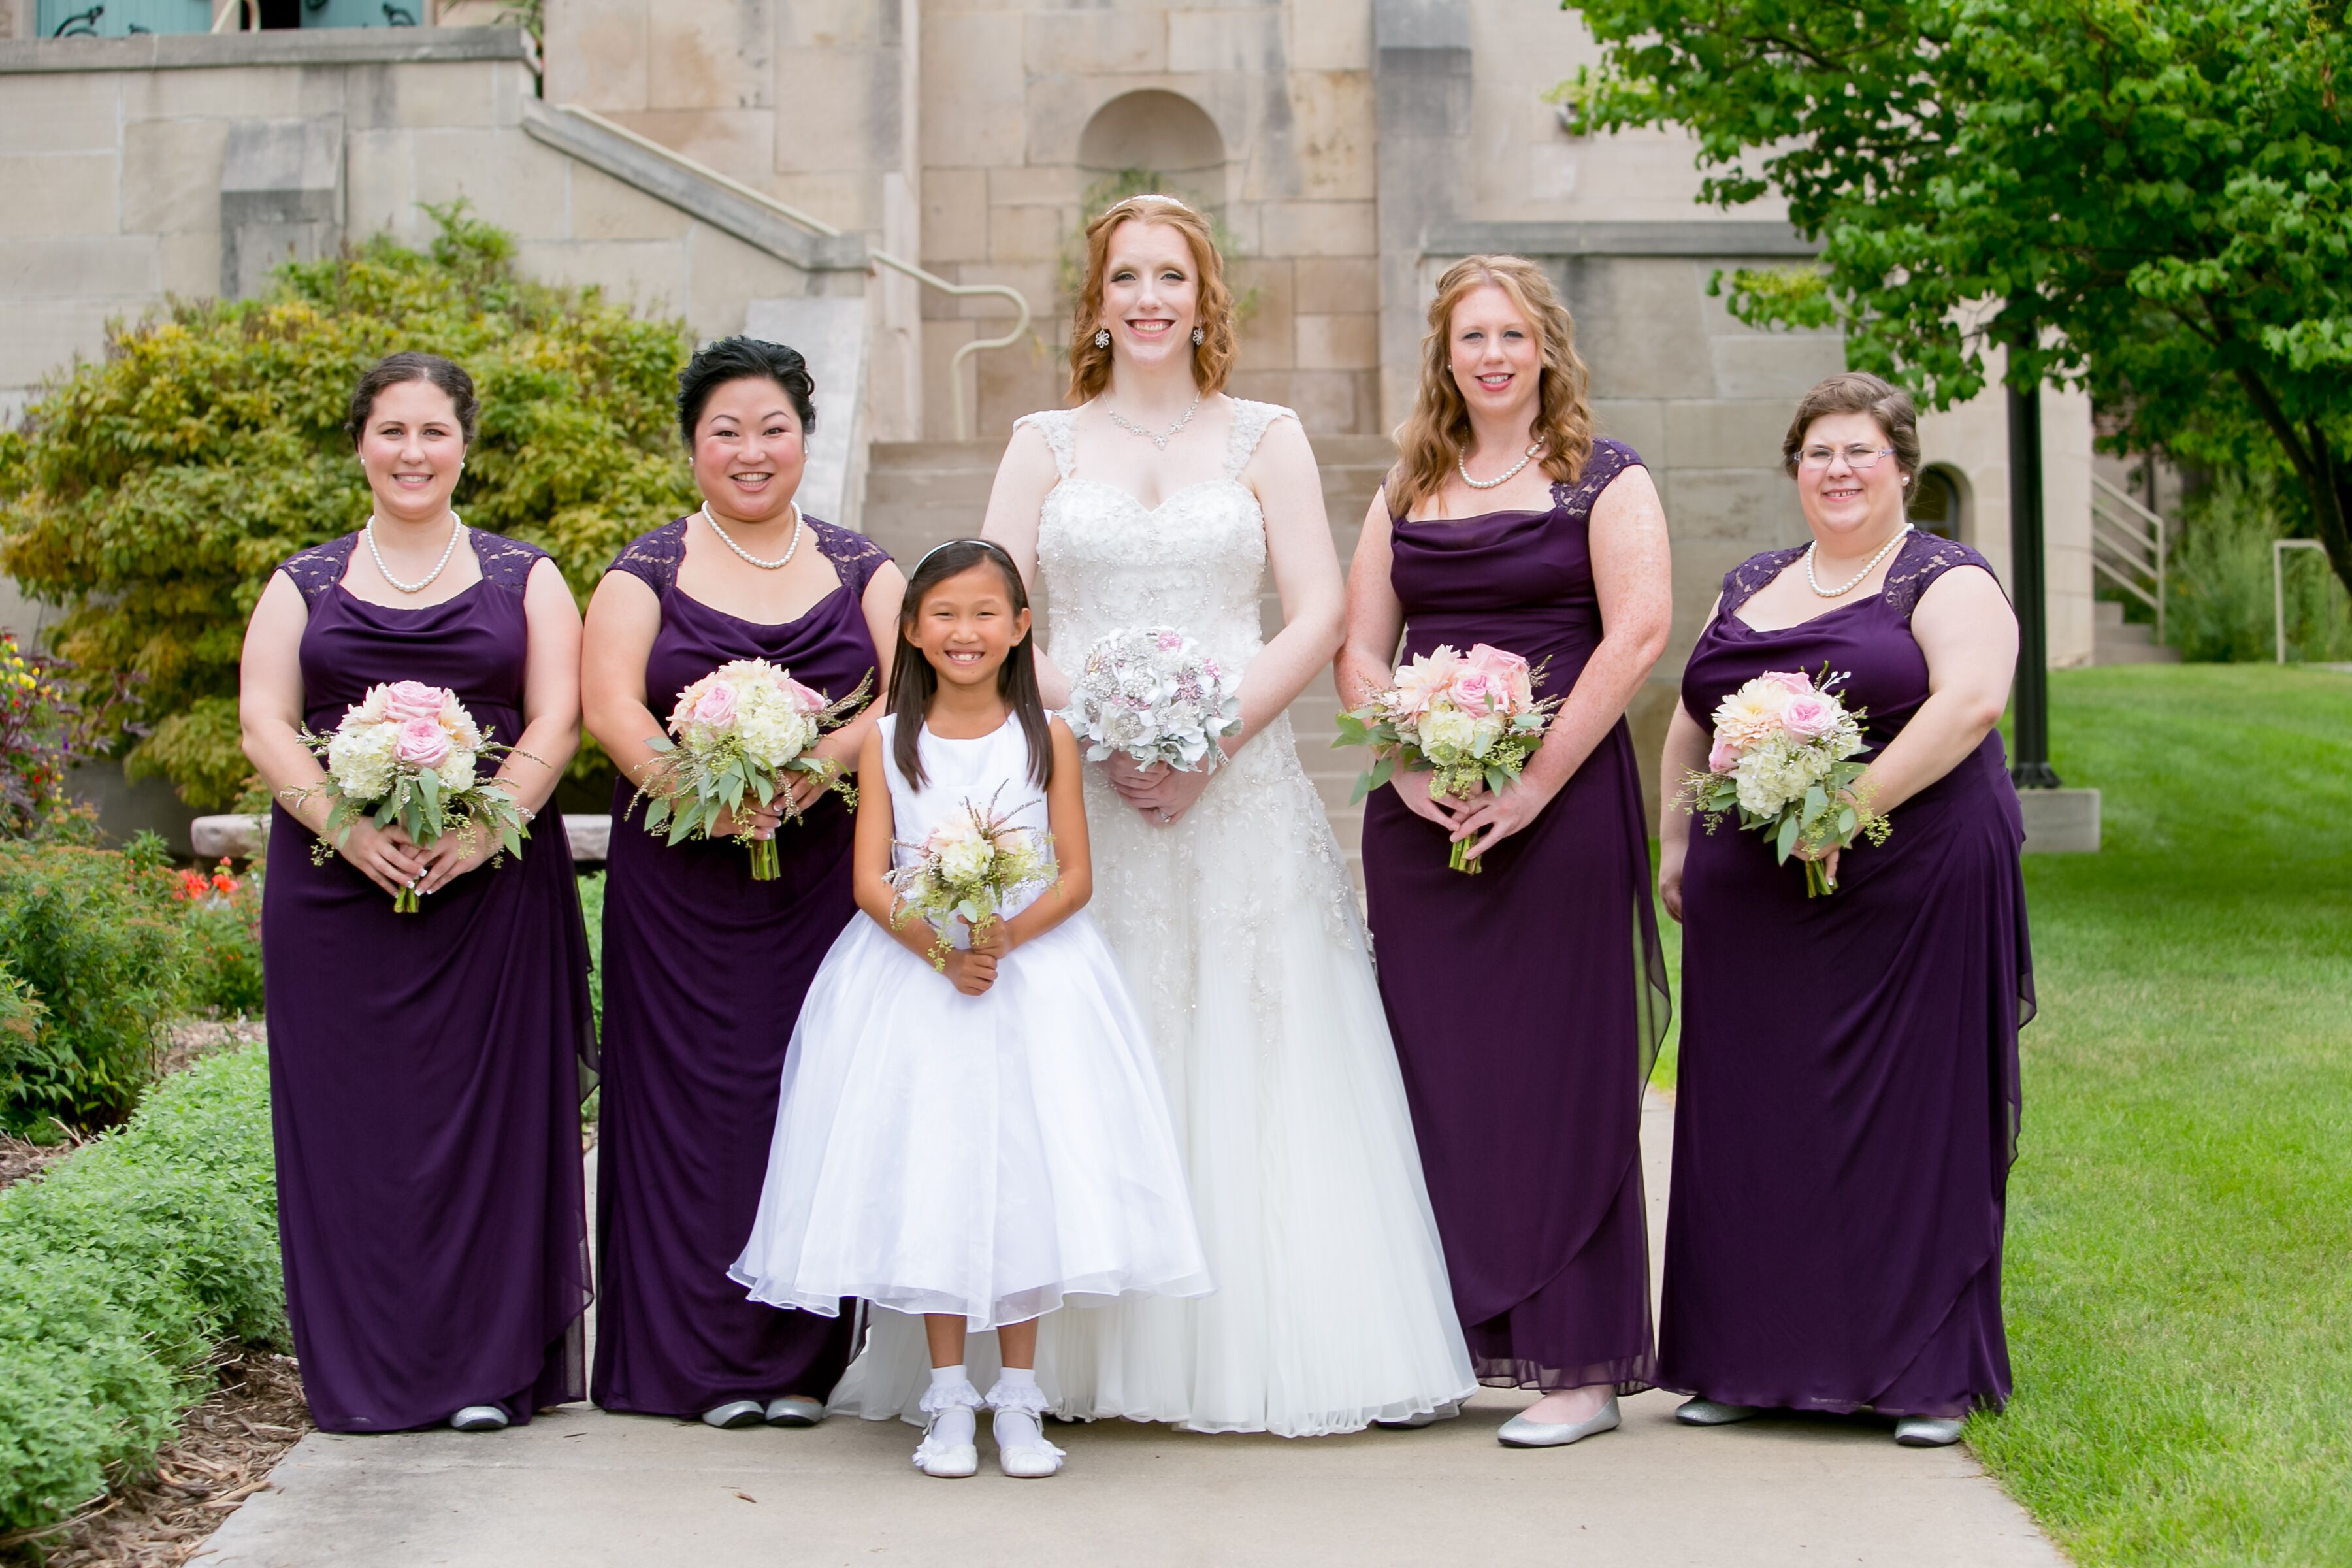 eggplant bridesmaid dresses